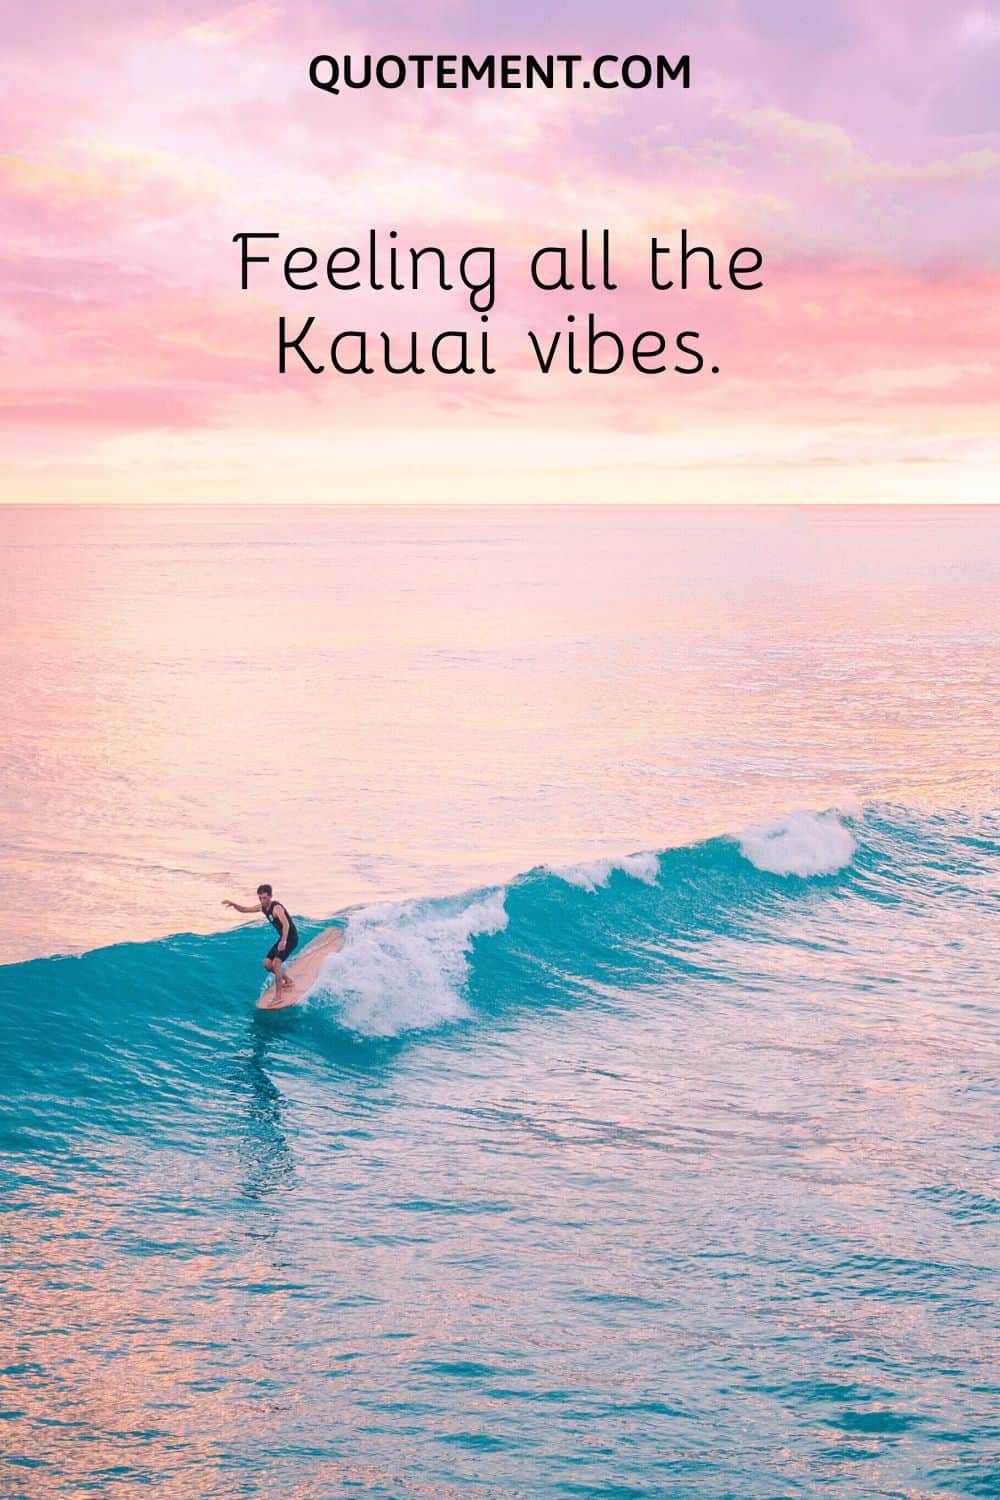 Feeling all the Kauai vibes.